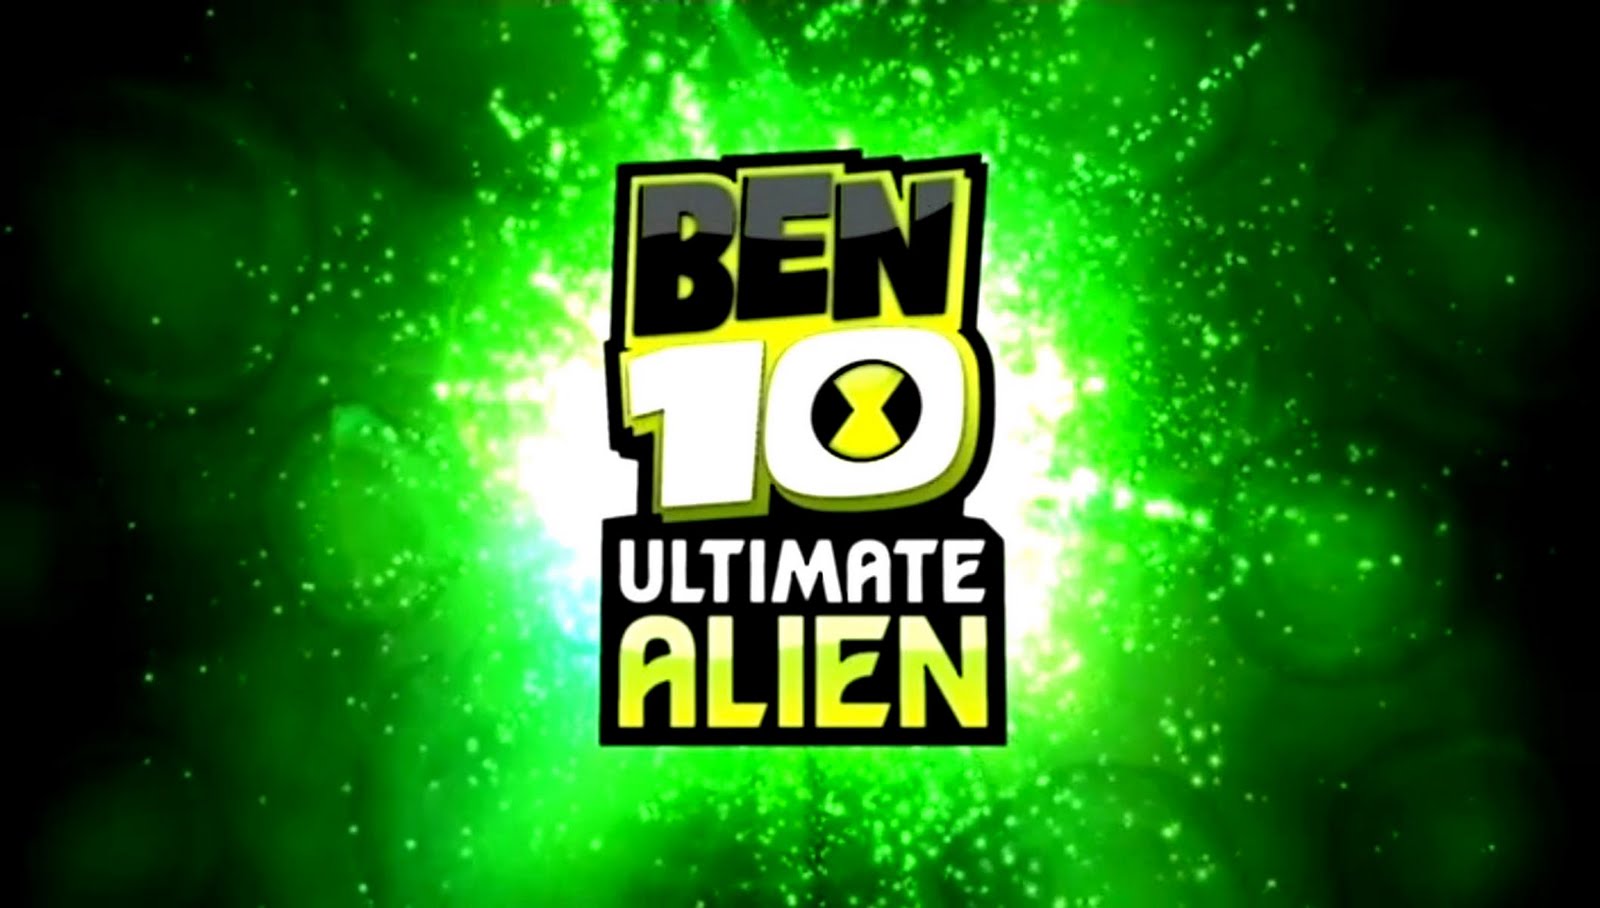 50+] Ben 10 Ultimate Alien Wallpapers - WallpaperSafari